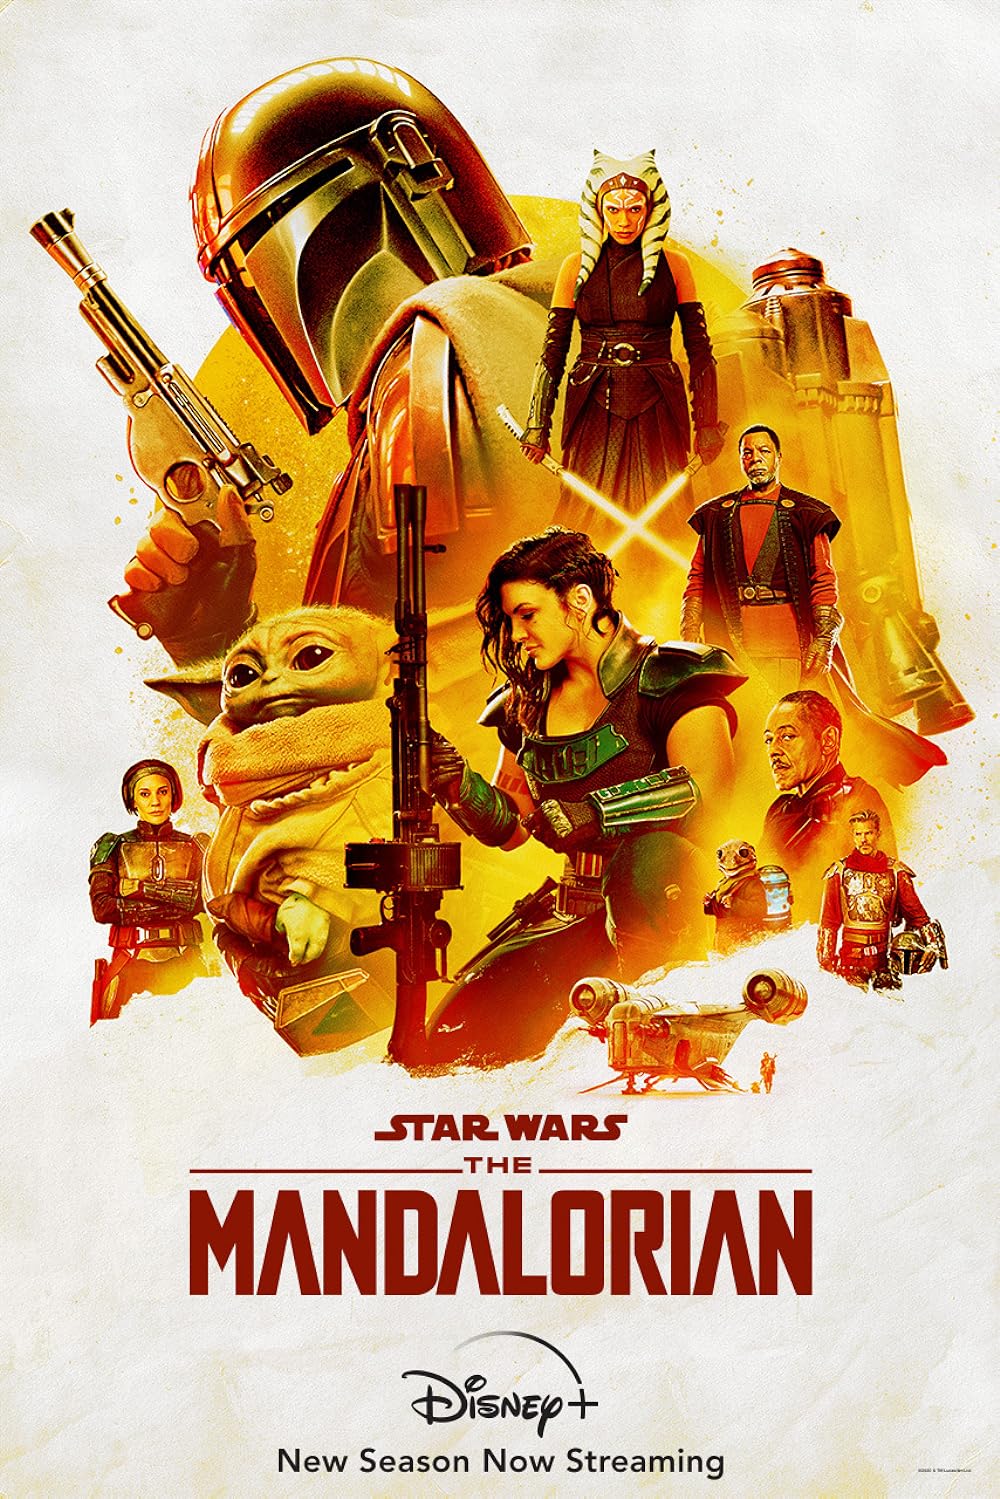 The Mandalorian (2020) S2 EP01&EP08 256Kbps 23.976Fps 48Khz 5.1Ch Disney+ DD+ E-AC3 Turkish Audio TAC